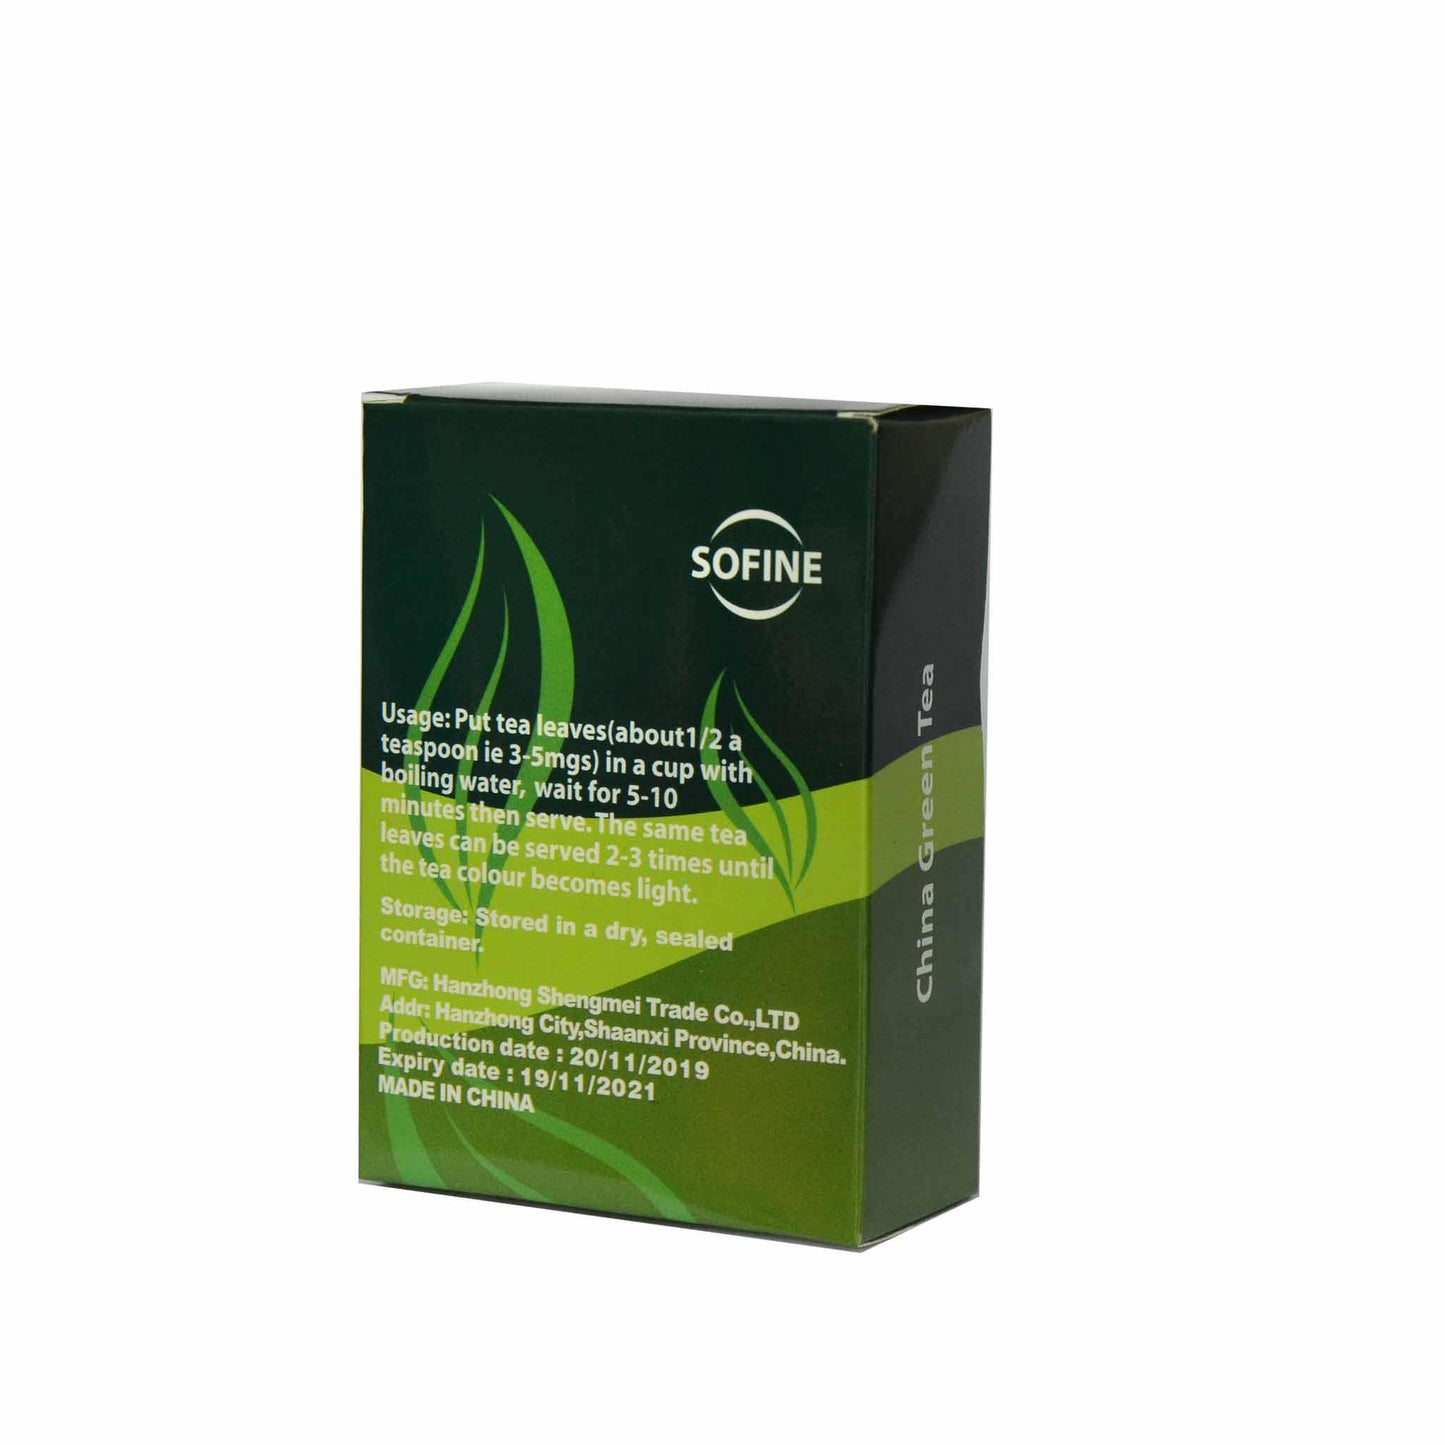 Sofine China Green Tea 50gms